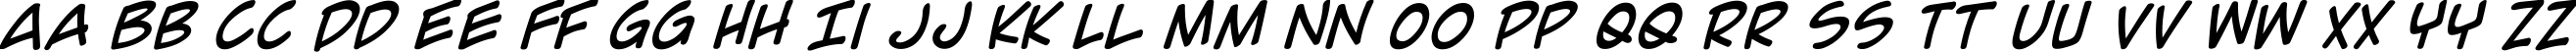 Пример написания английского алфавита шрифтом Comic Geek Italic